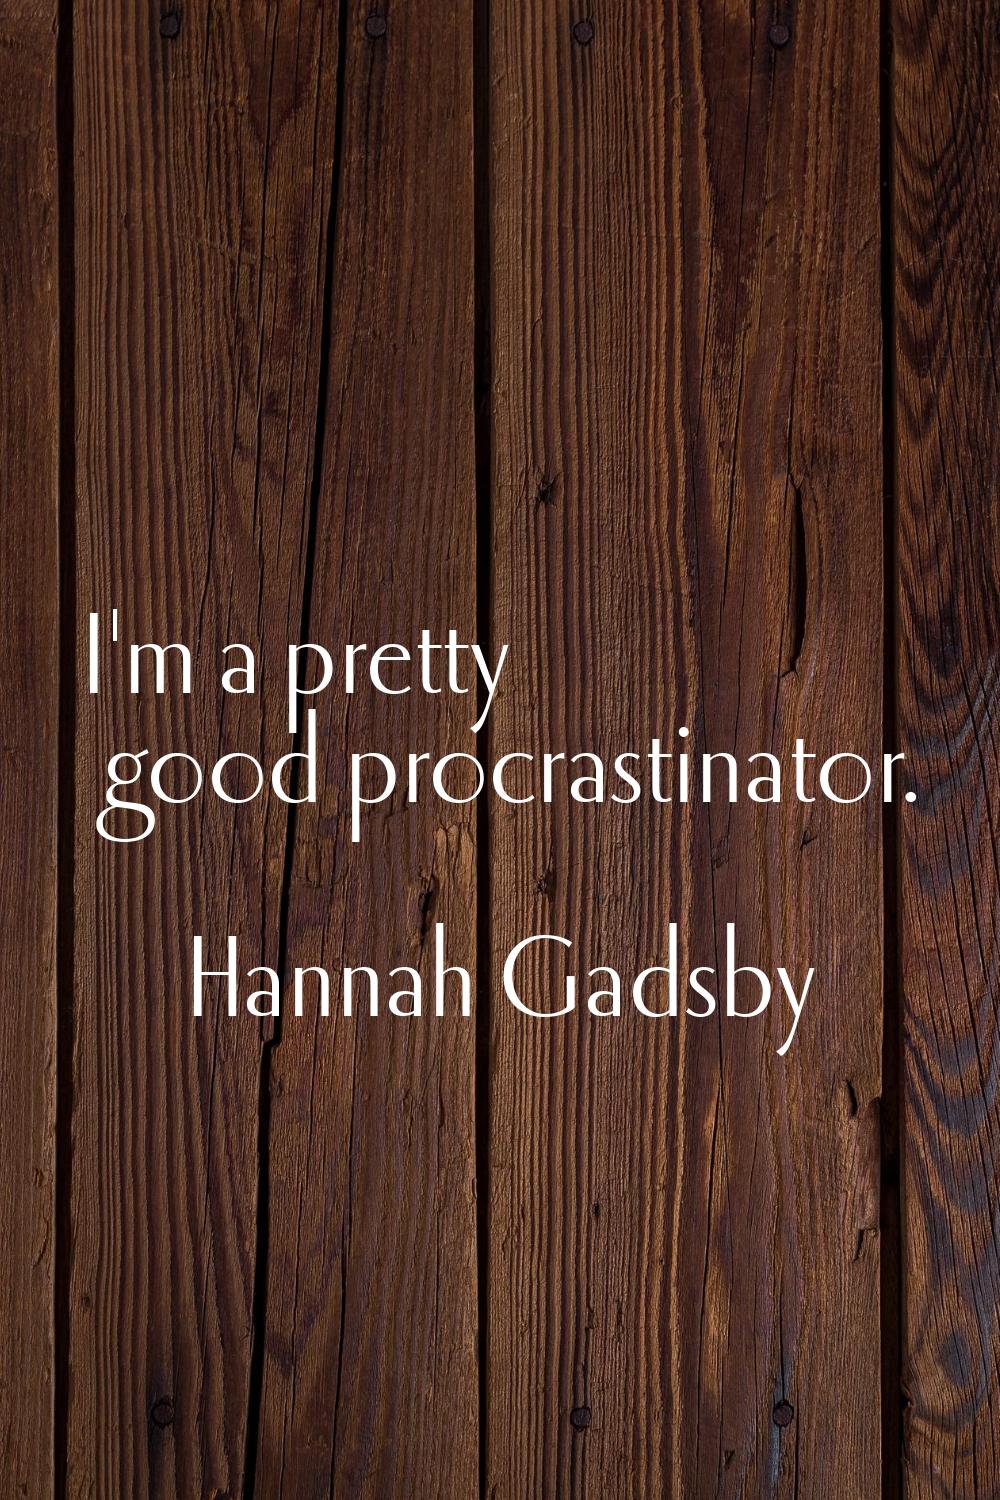 I'm a pretty good procrastinator.